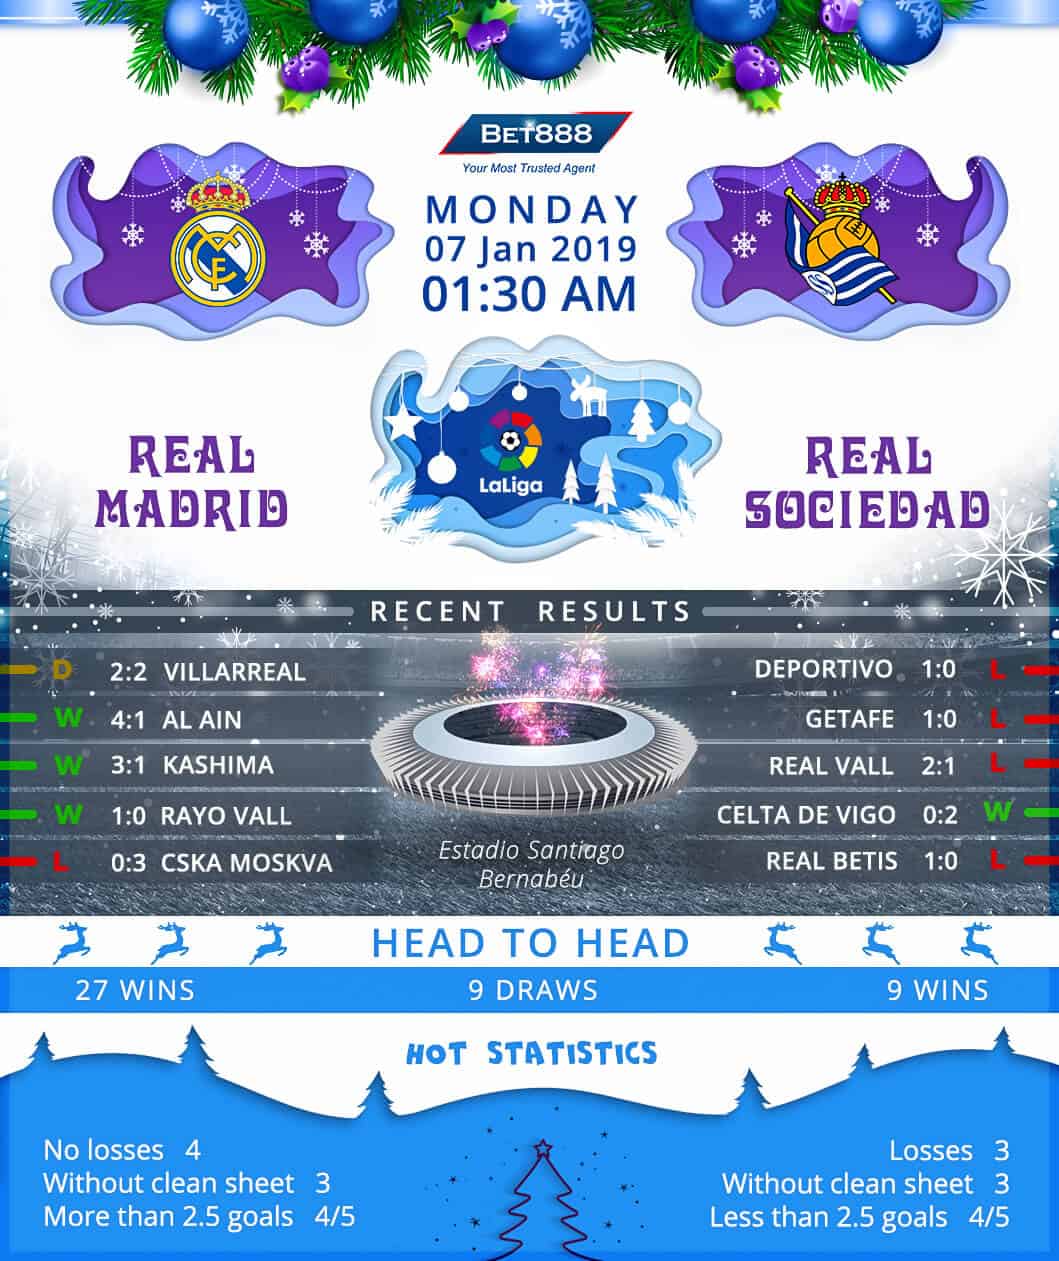 Real Madrid vs Real Sociedad 07/01/19